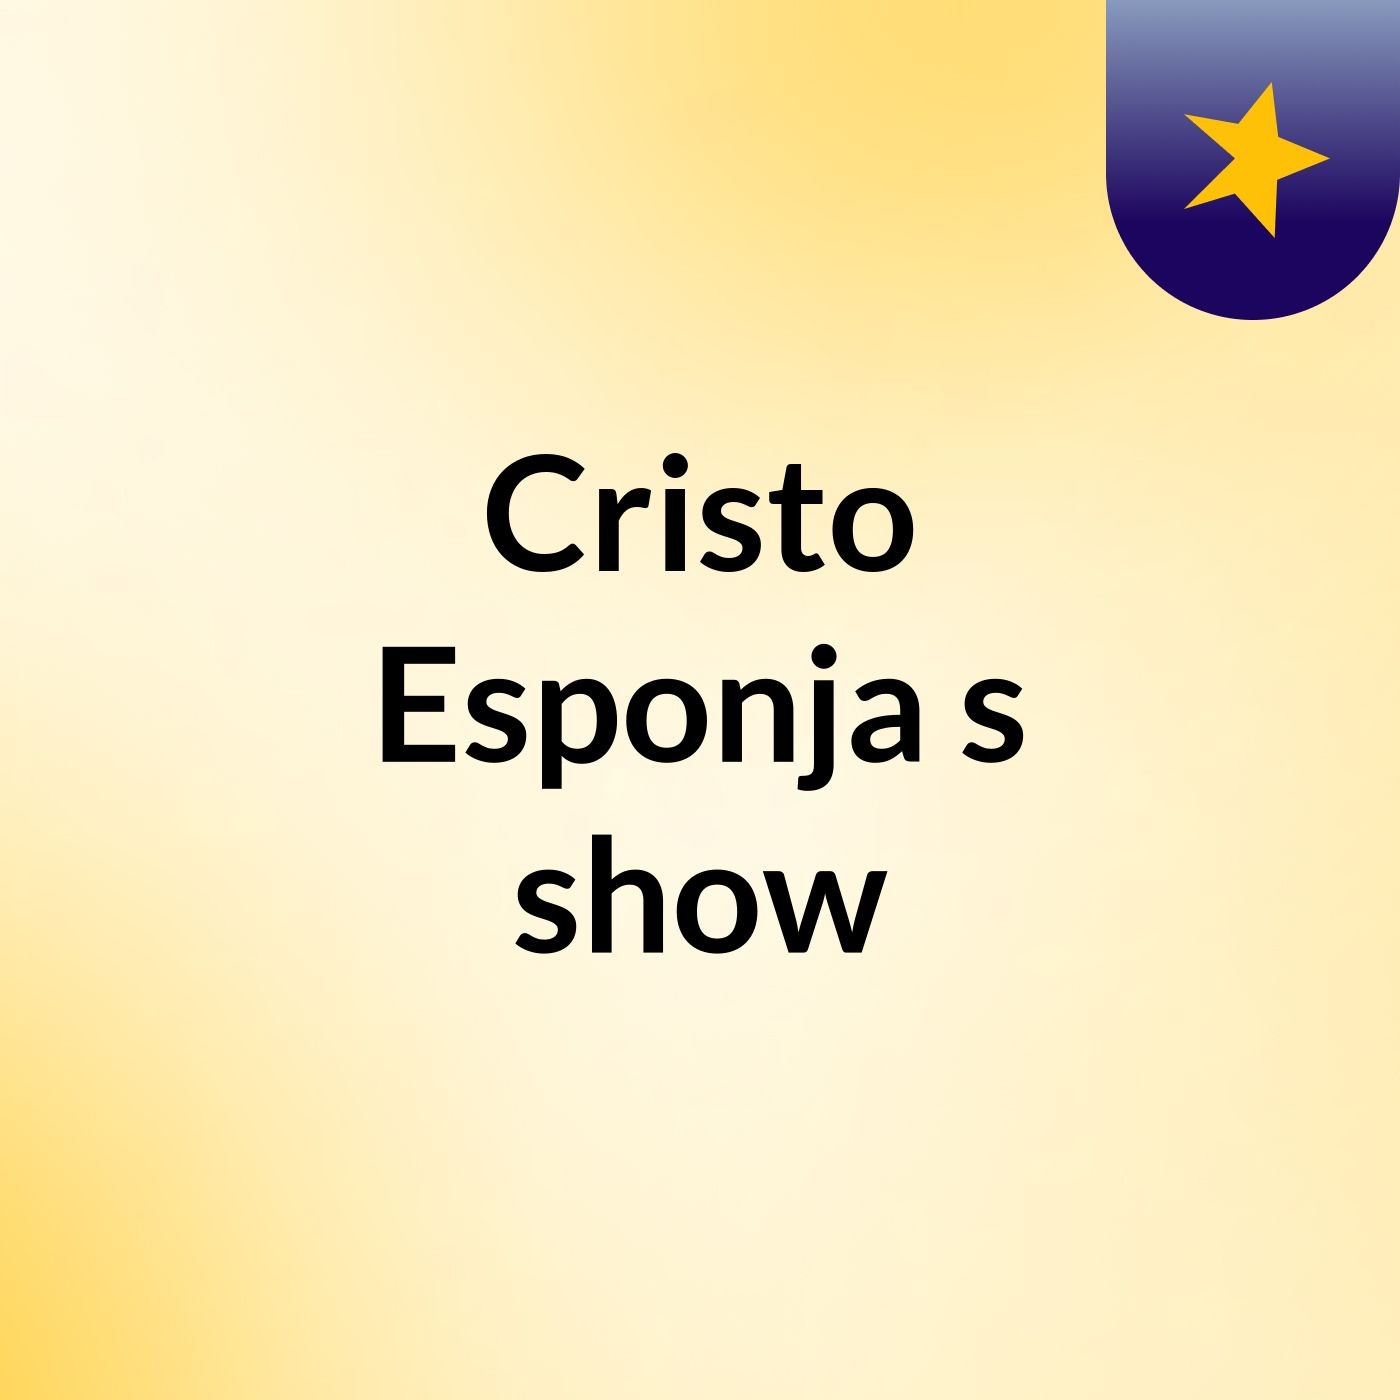 Cristo Esponja's show